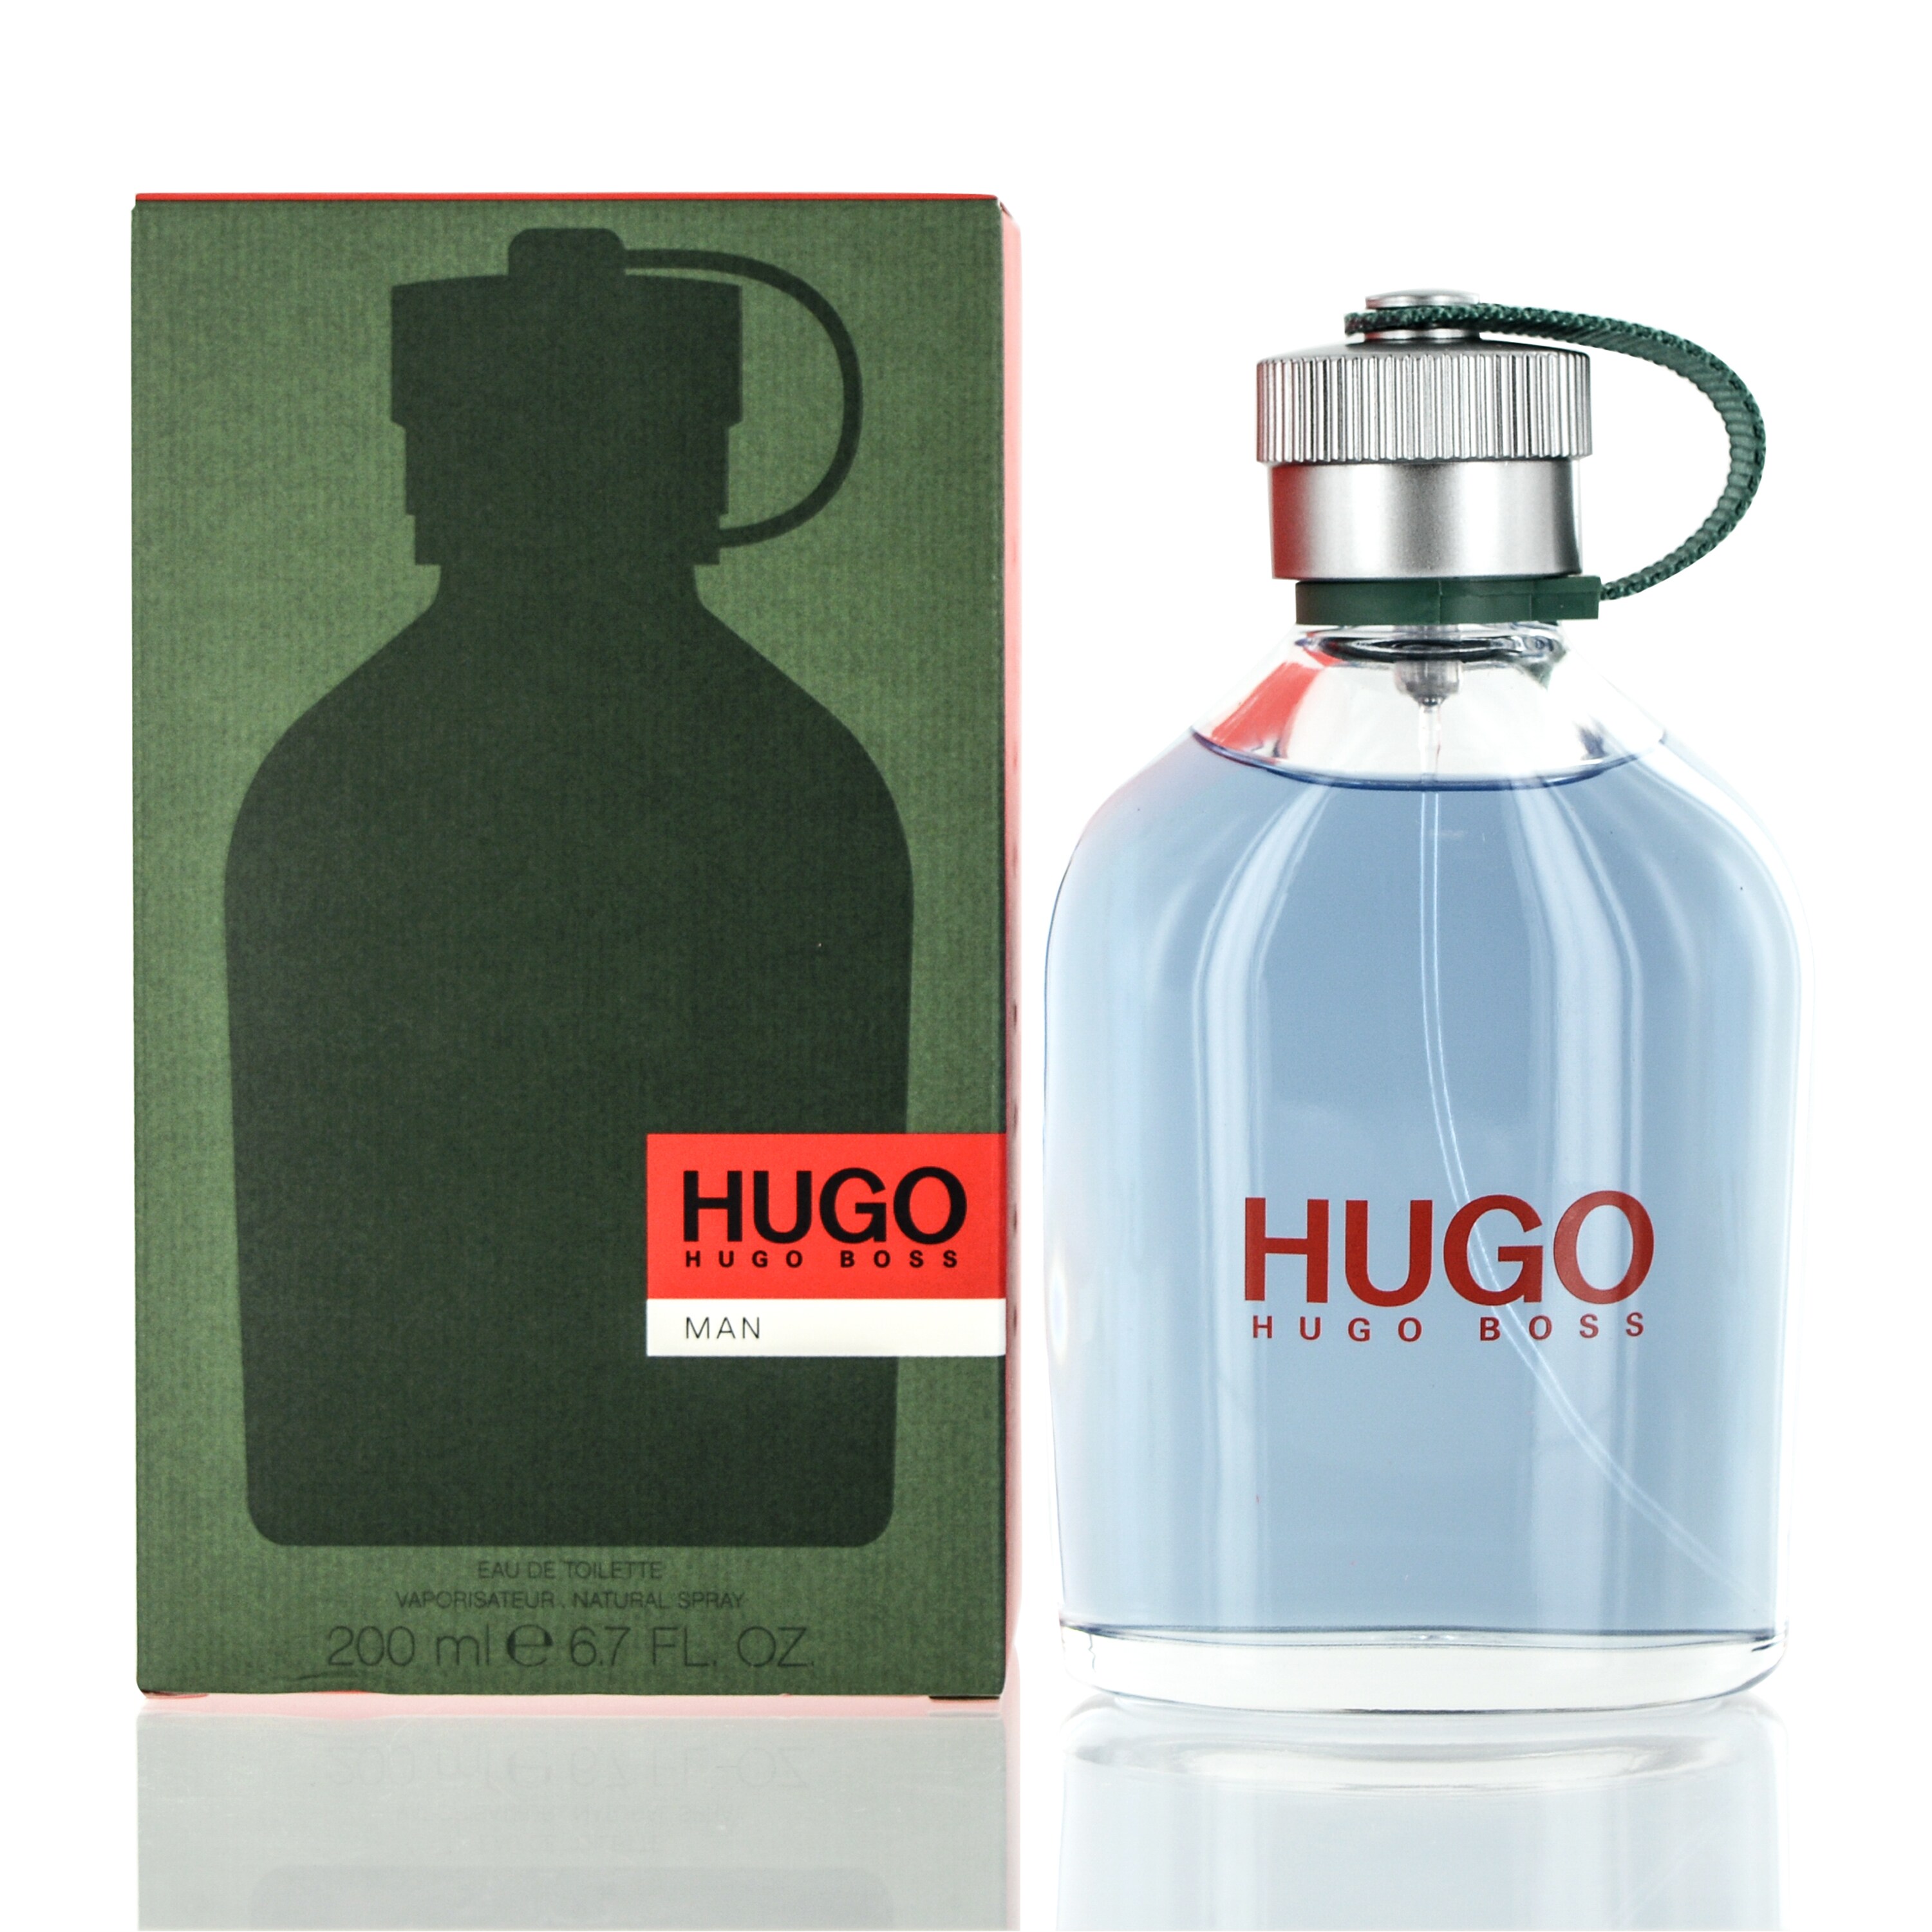 minyak wangi hugo boss botol biru - Steven Pullman